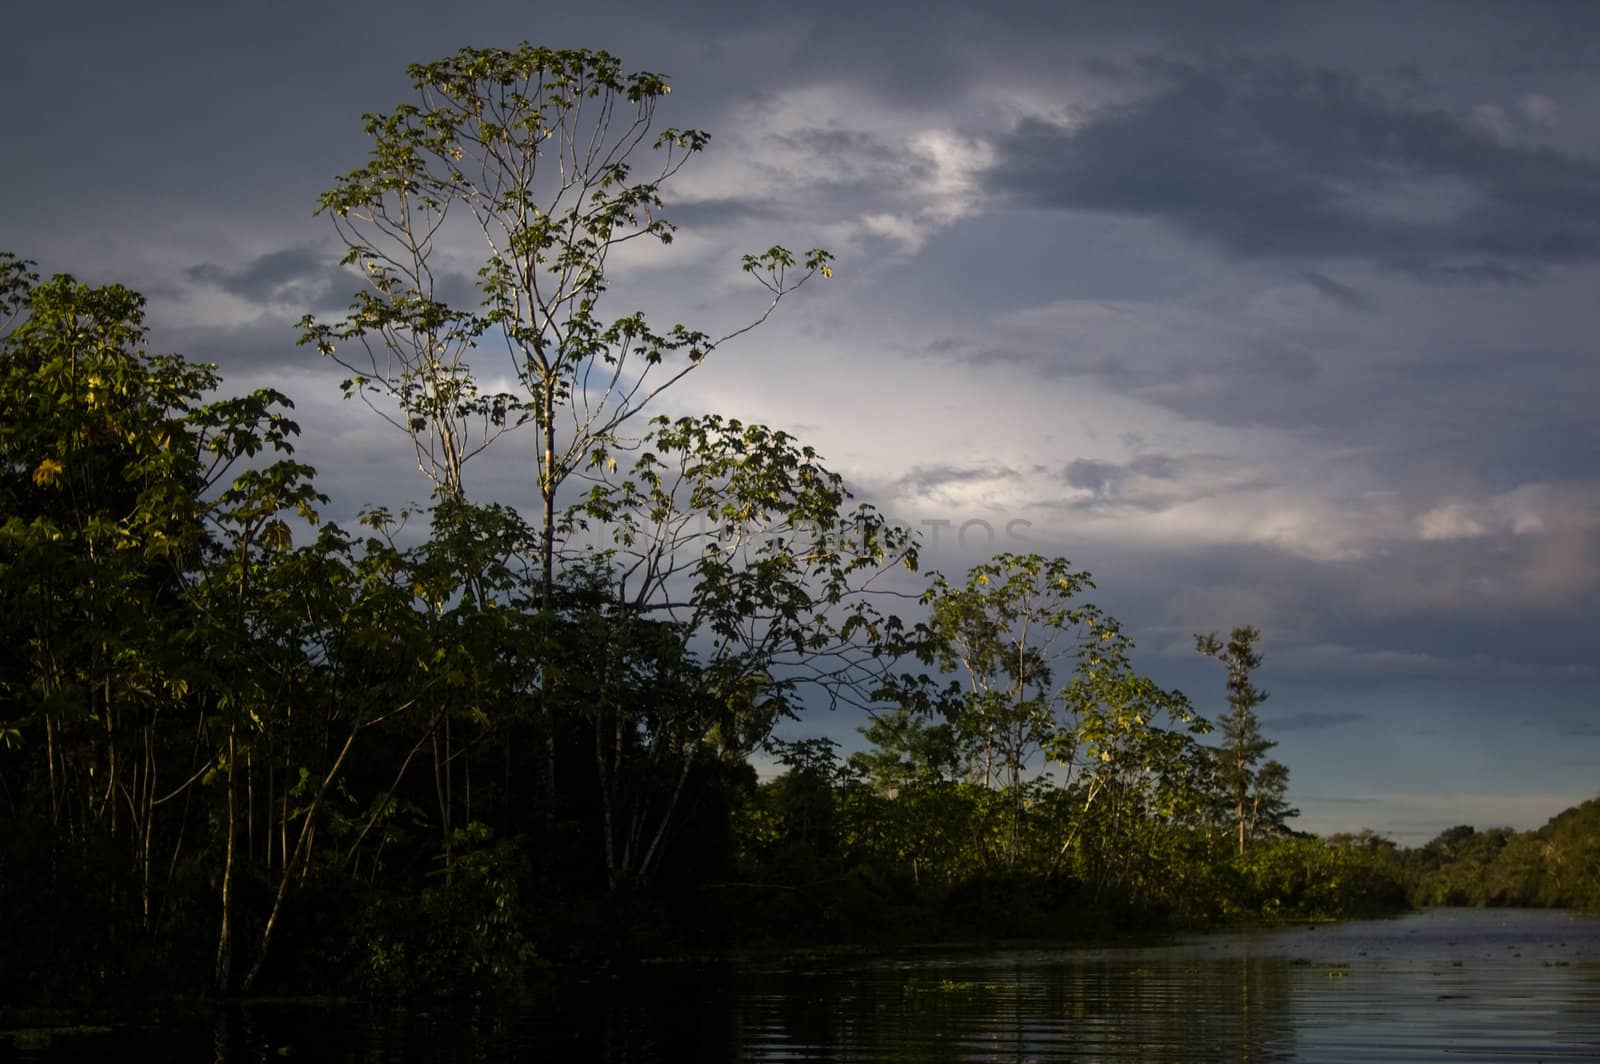 Stormy skies over Amazon by edan